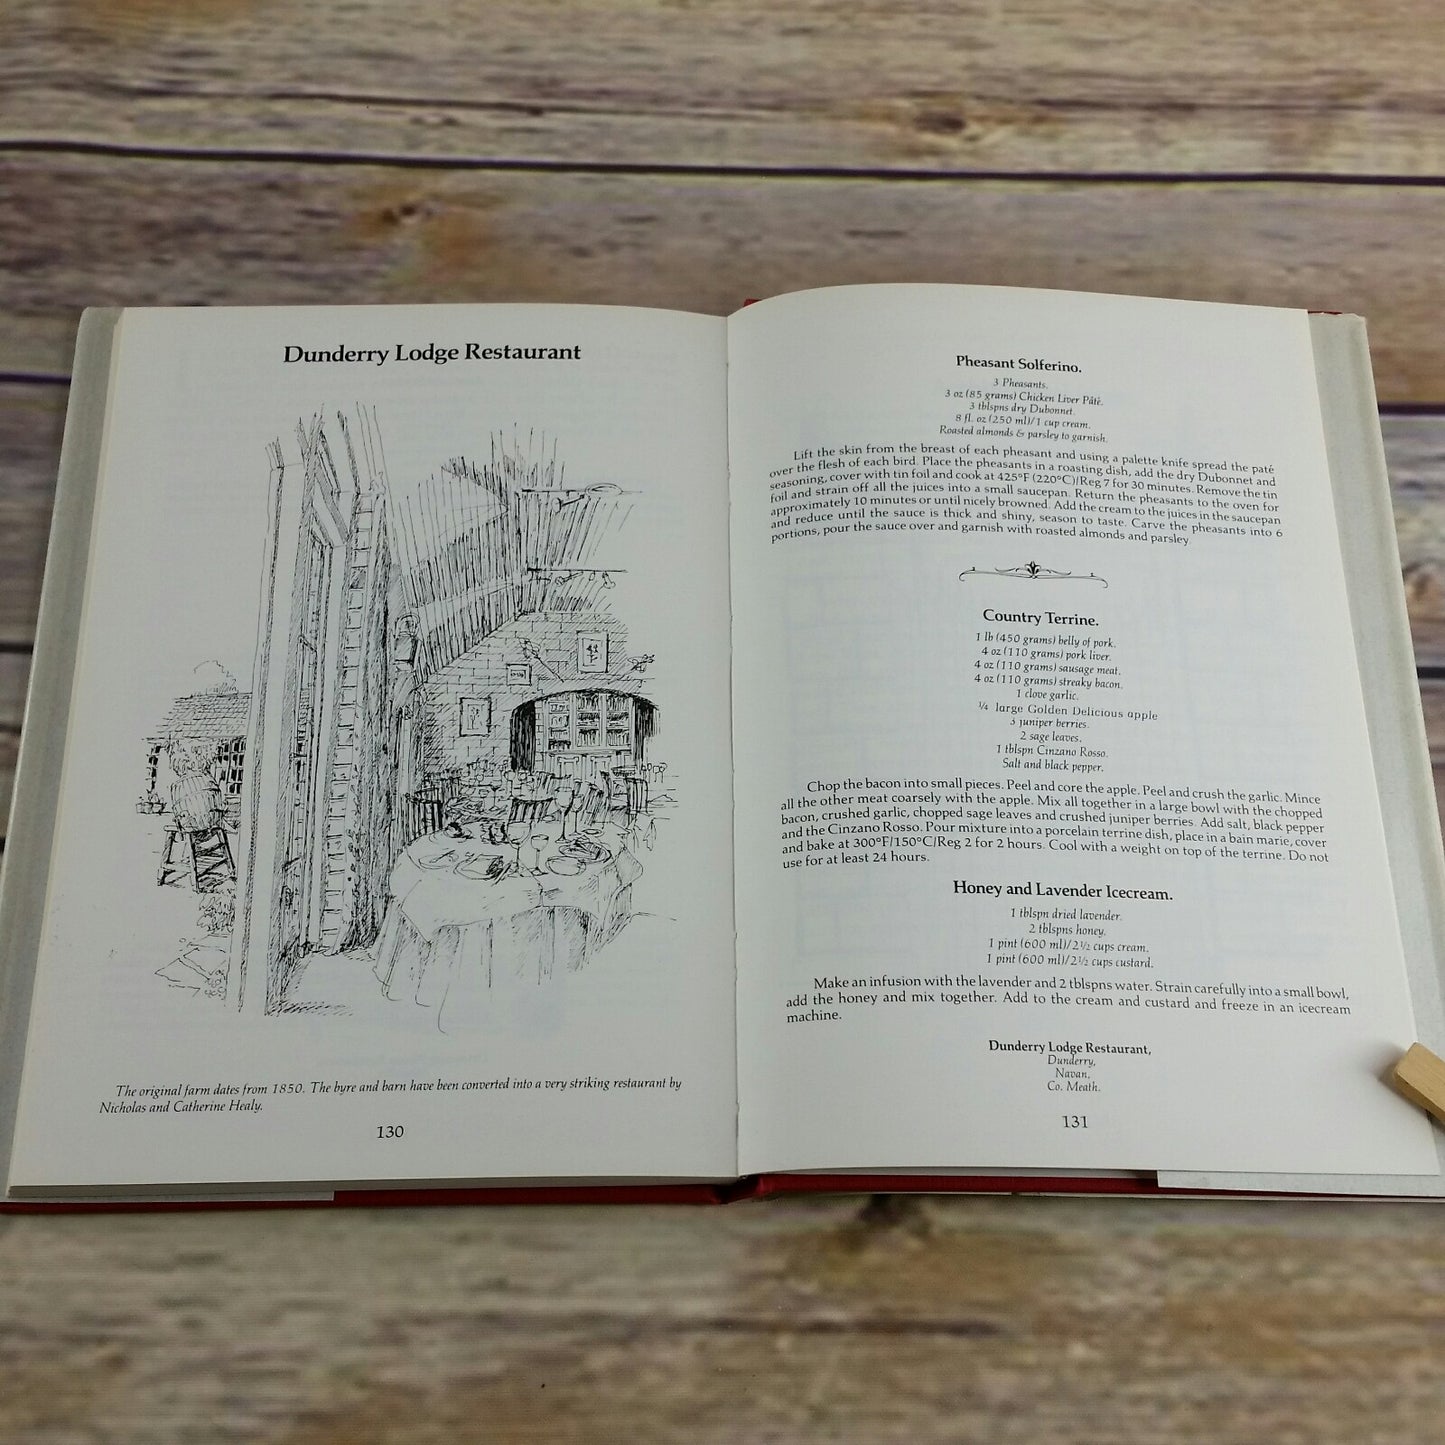 Vintage Cookbook Recipes from Irish Country Houses 1987 Hardcover Irish Recipes Gillian Berwick - At Grandma's Table